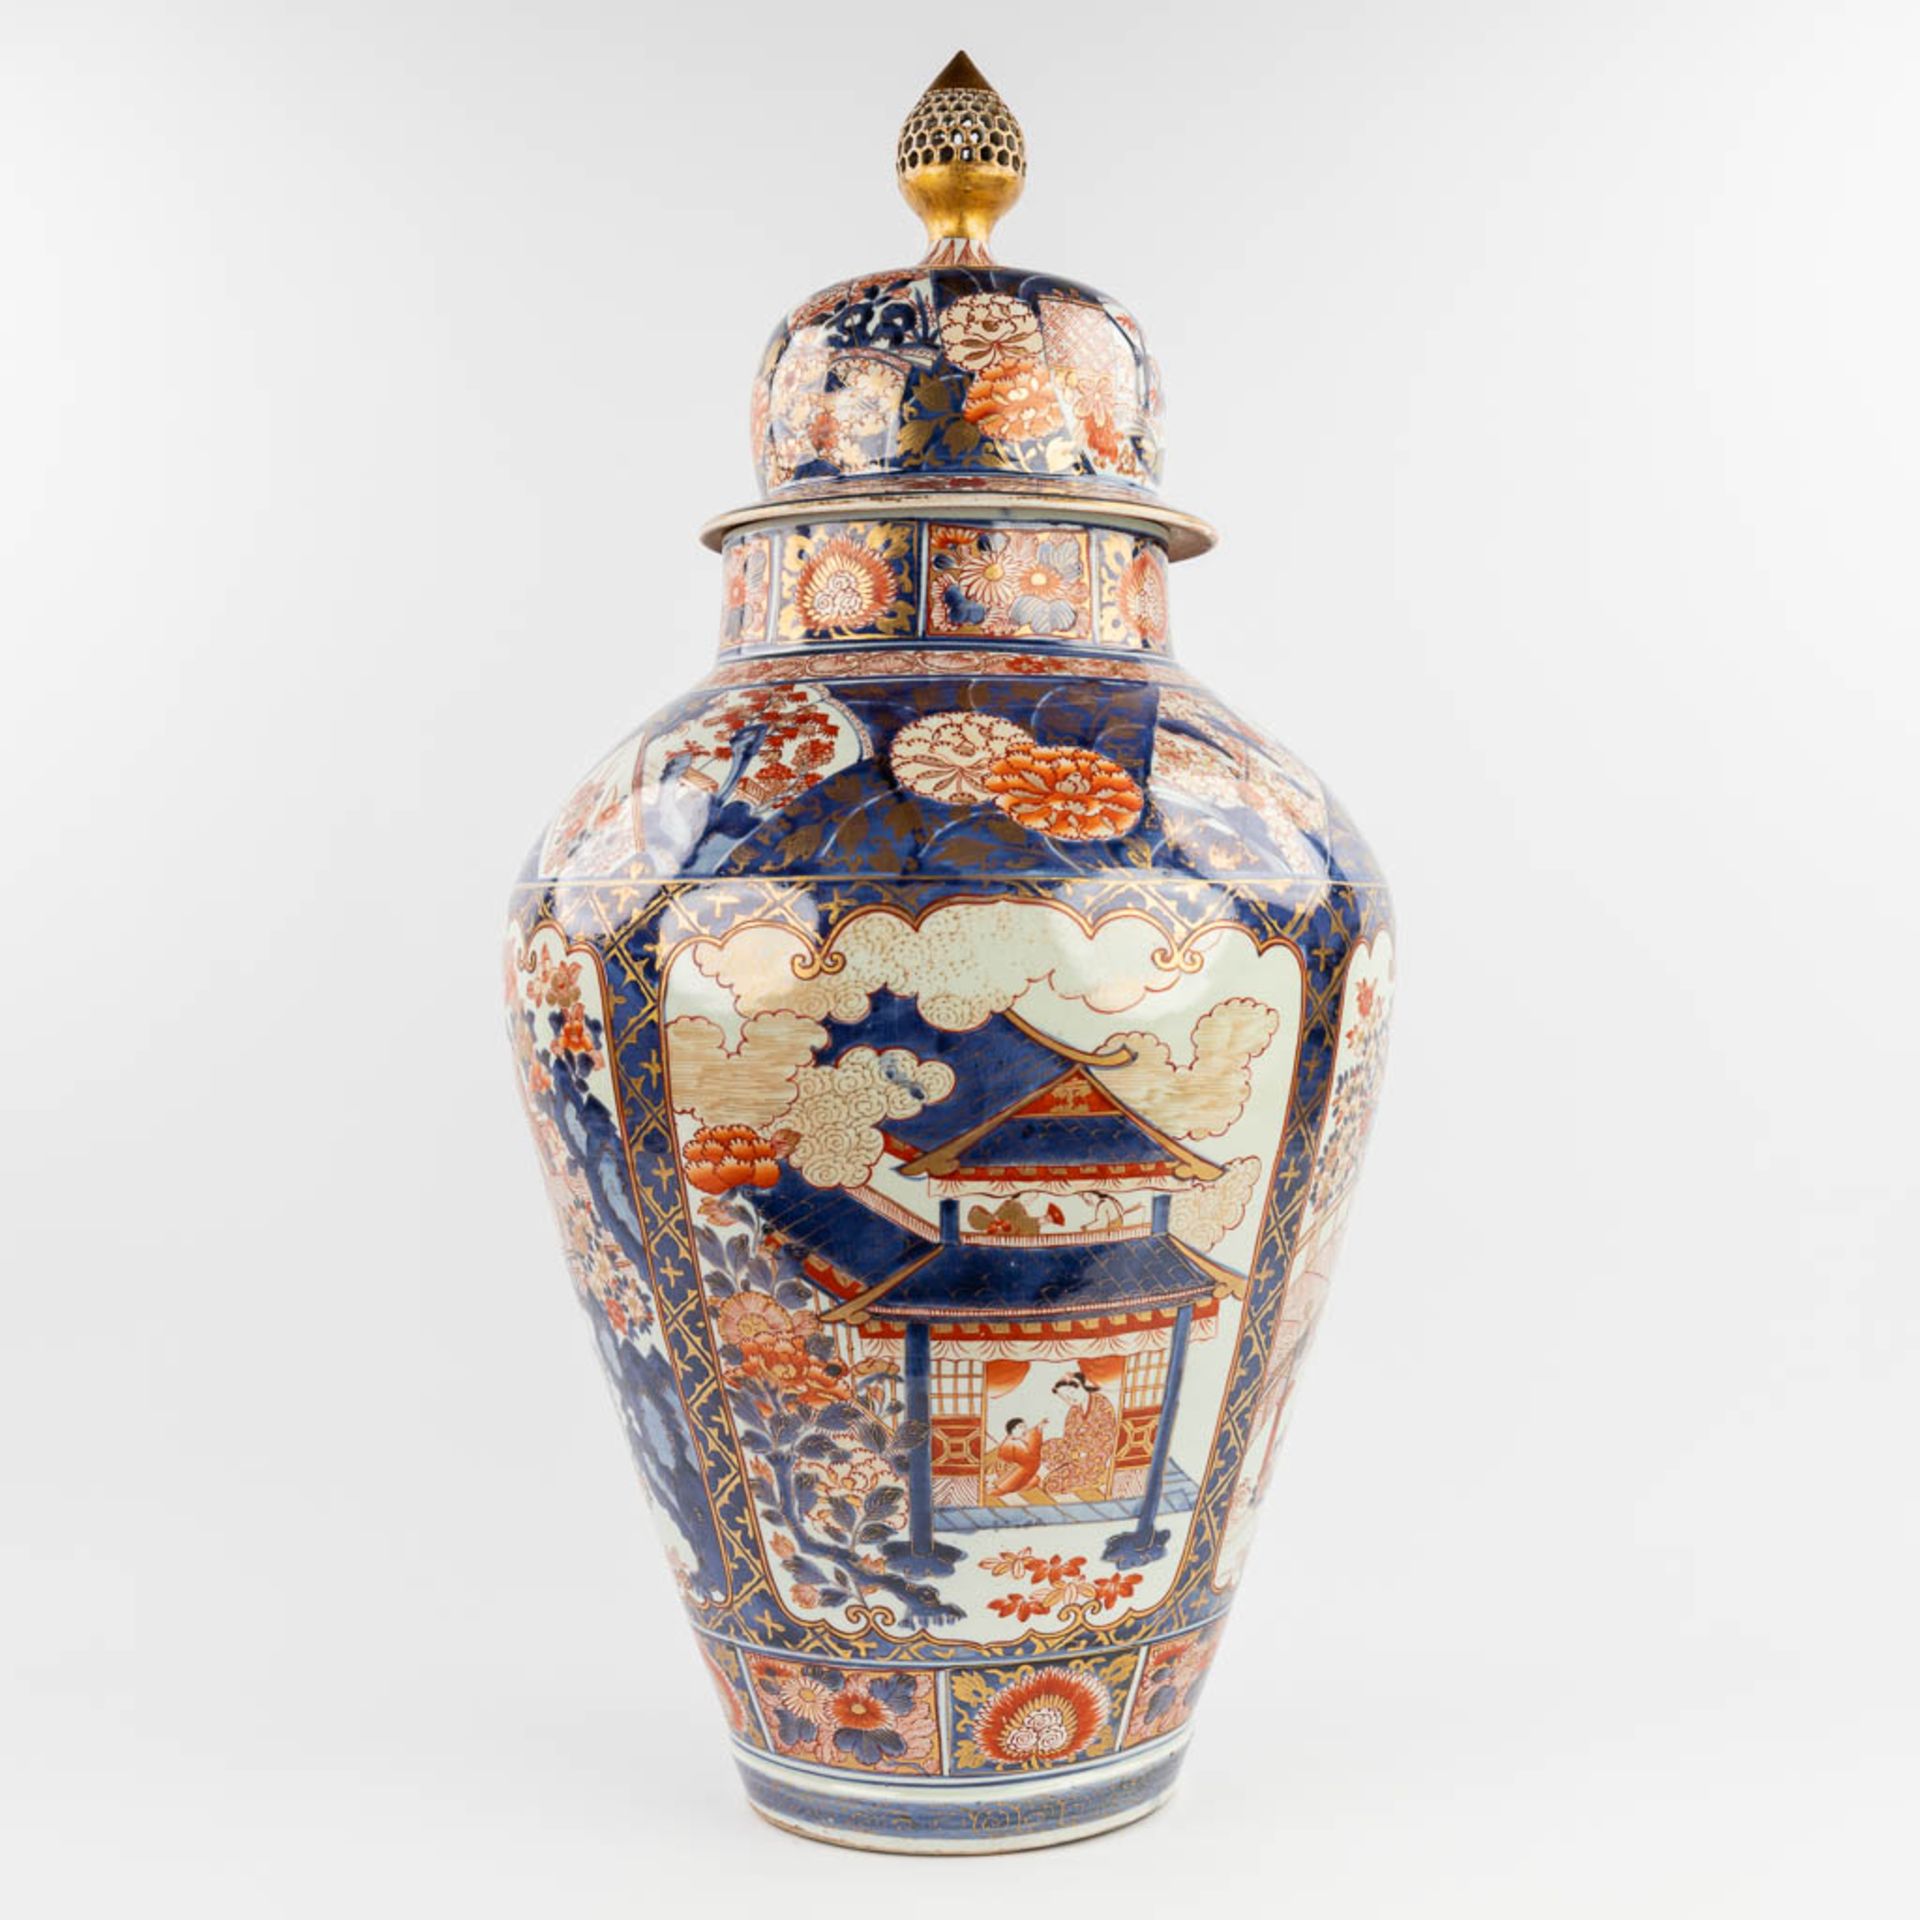 A large vase with lid, Imari porcelain, 19th century. (H: 87 x D: 39 cm) - Image 5 of 15